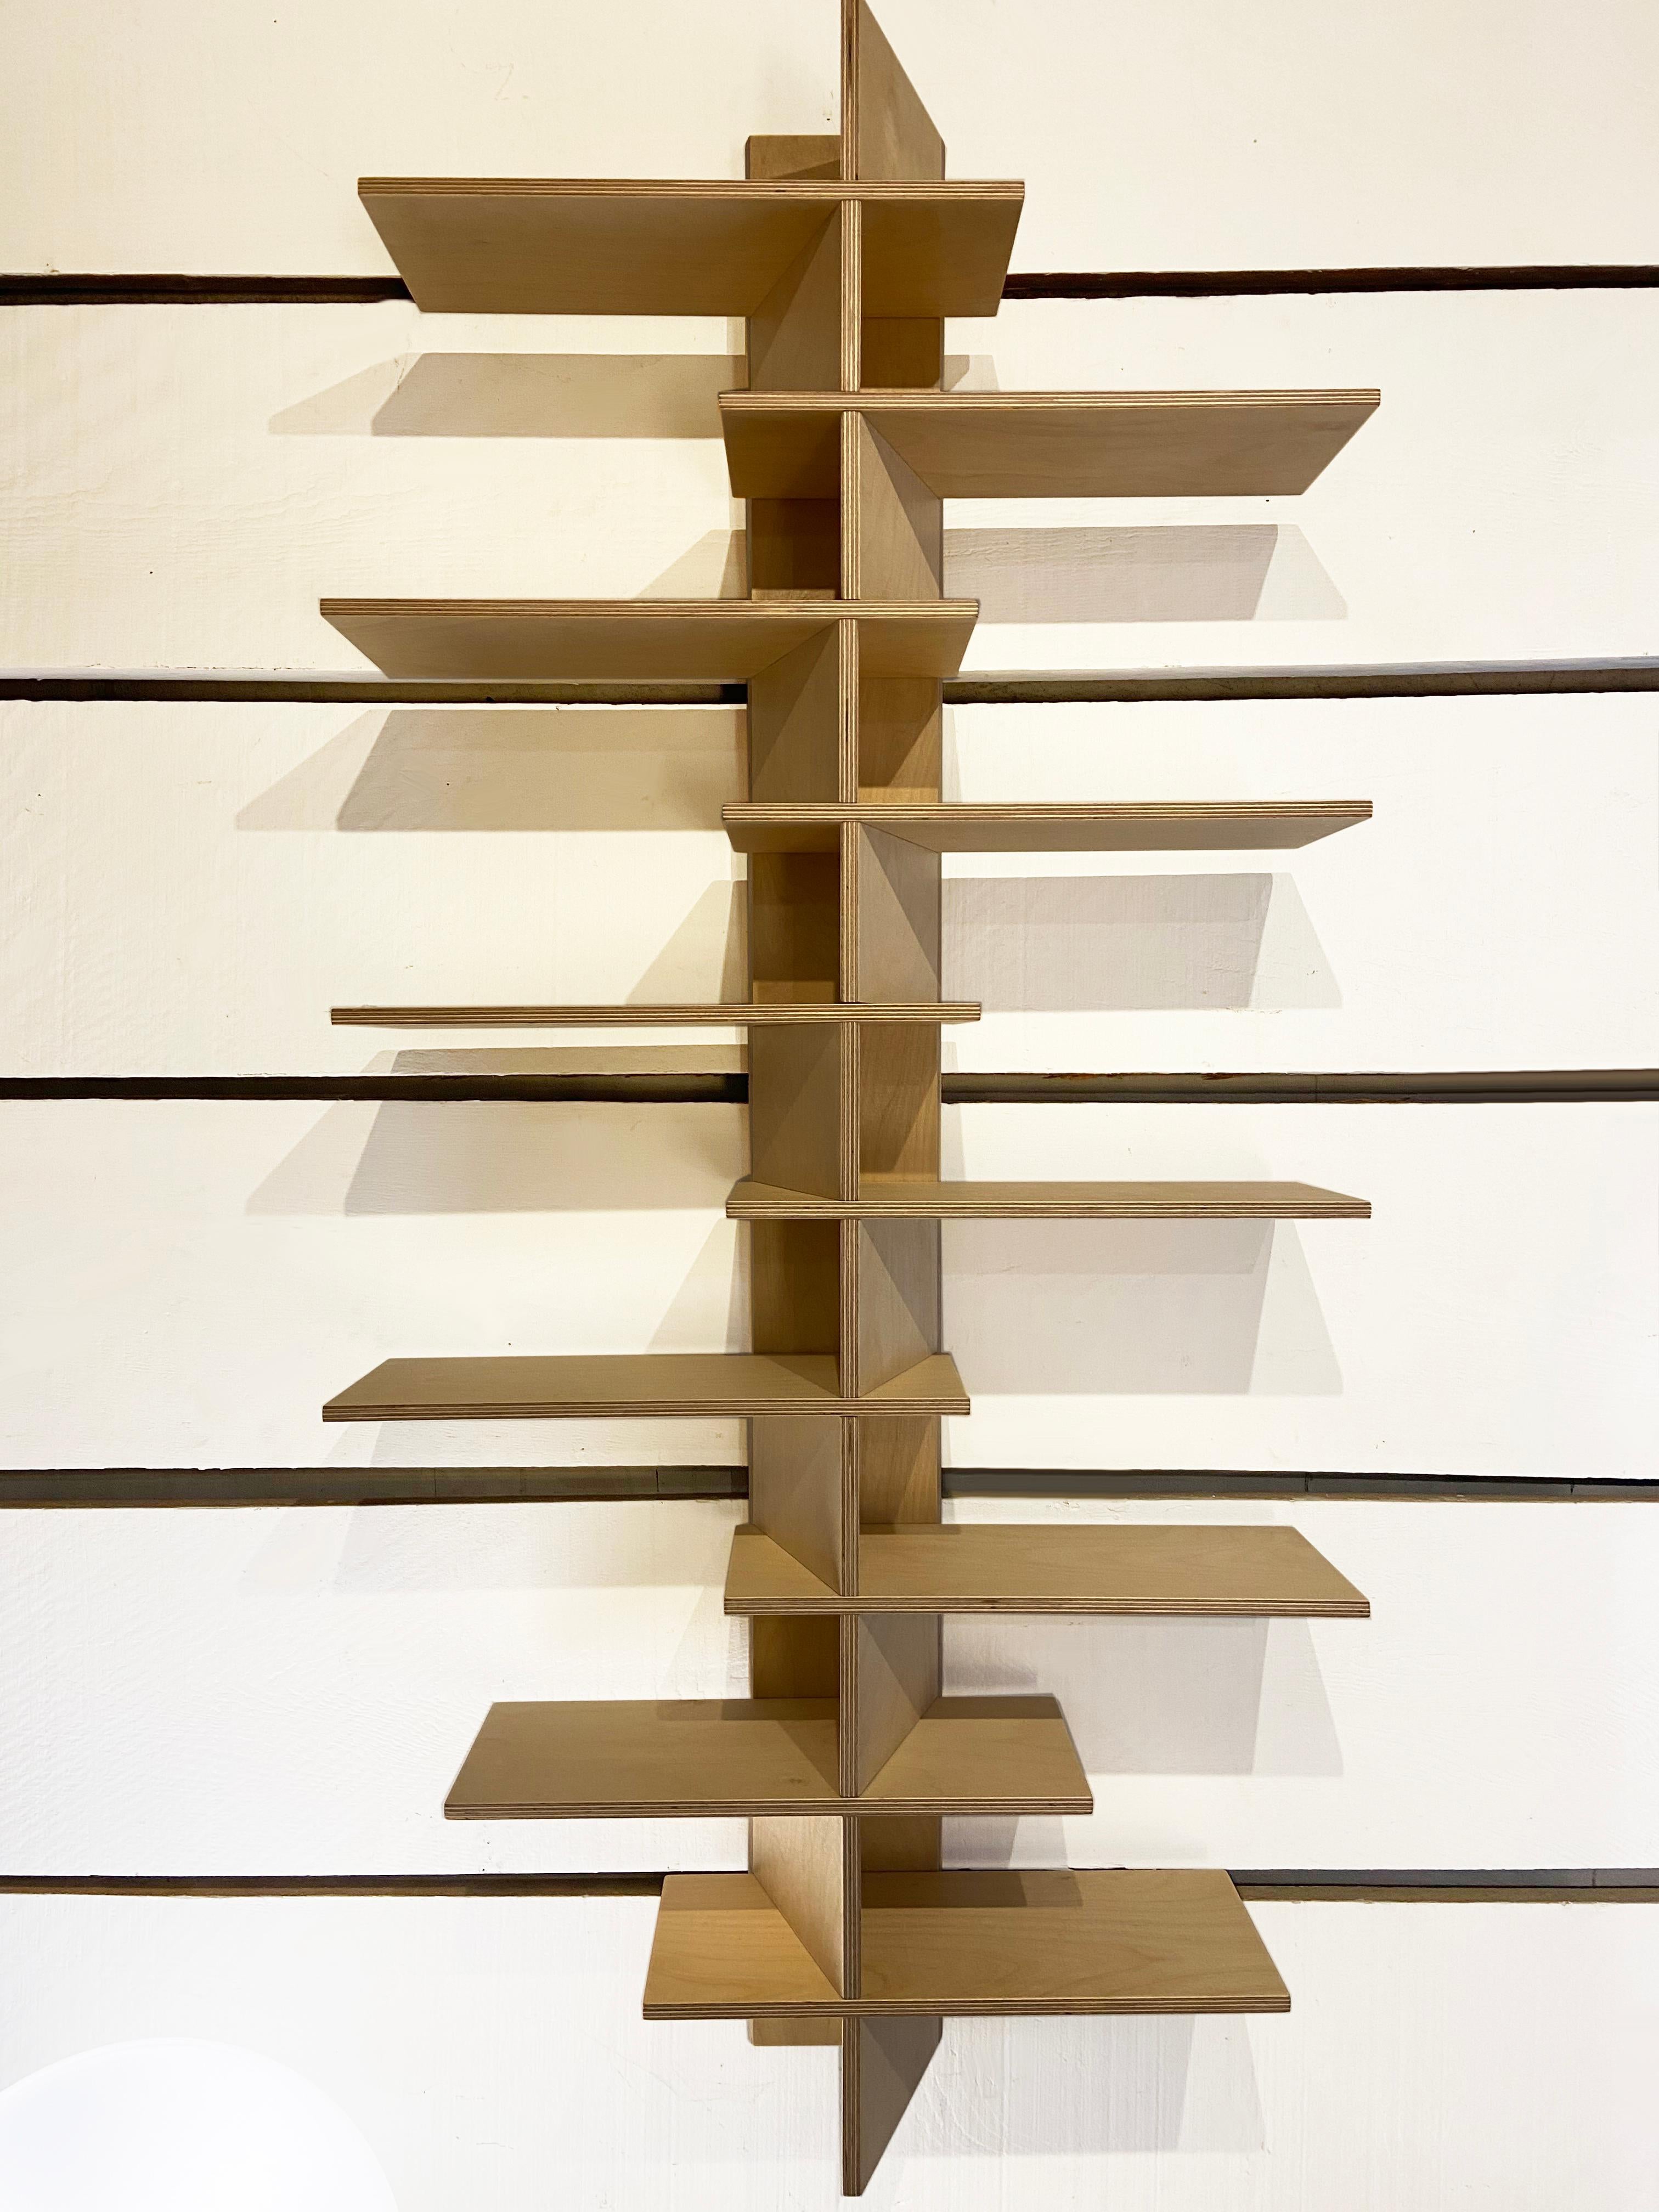 Célestine shelf - Xavier Miclet,
circa 2000
Size: 145 x 70 cm x 22 cm
Birch multiply
950 Euros.